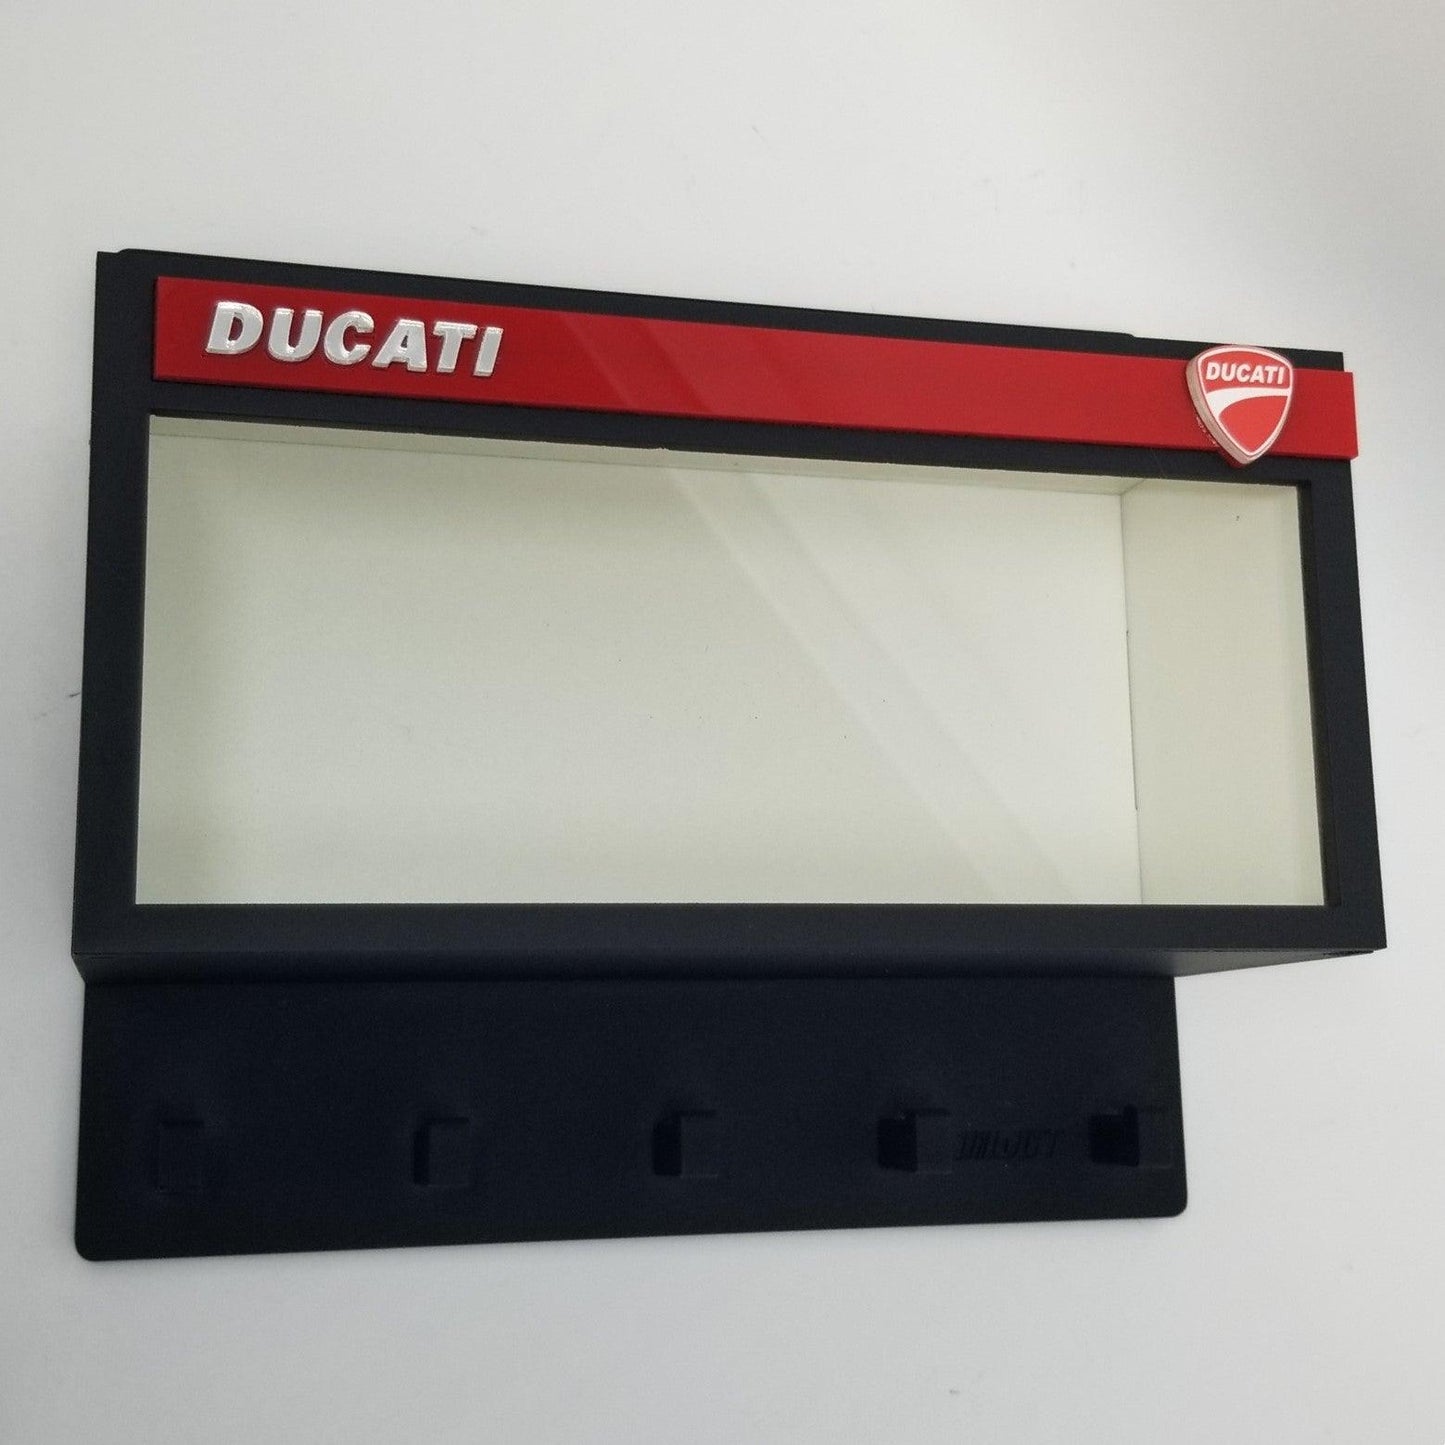 Ducati Dealership Wall Key Hook Rack - Exclusive item - Handcrafted Key Holder - Brazilian Shop